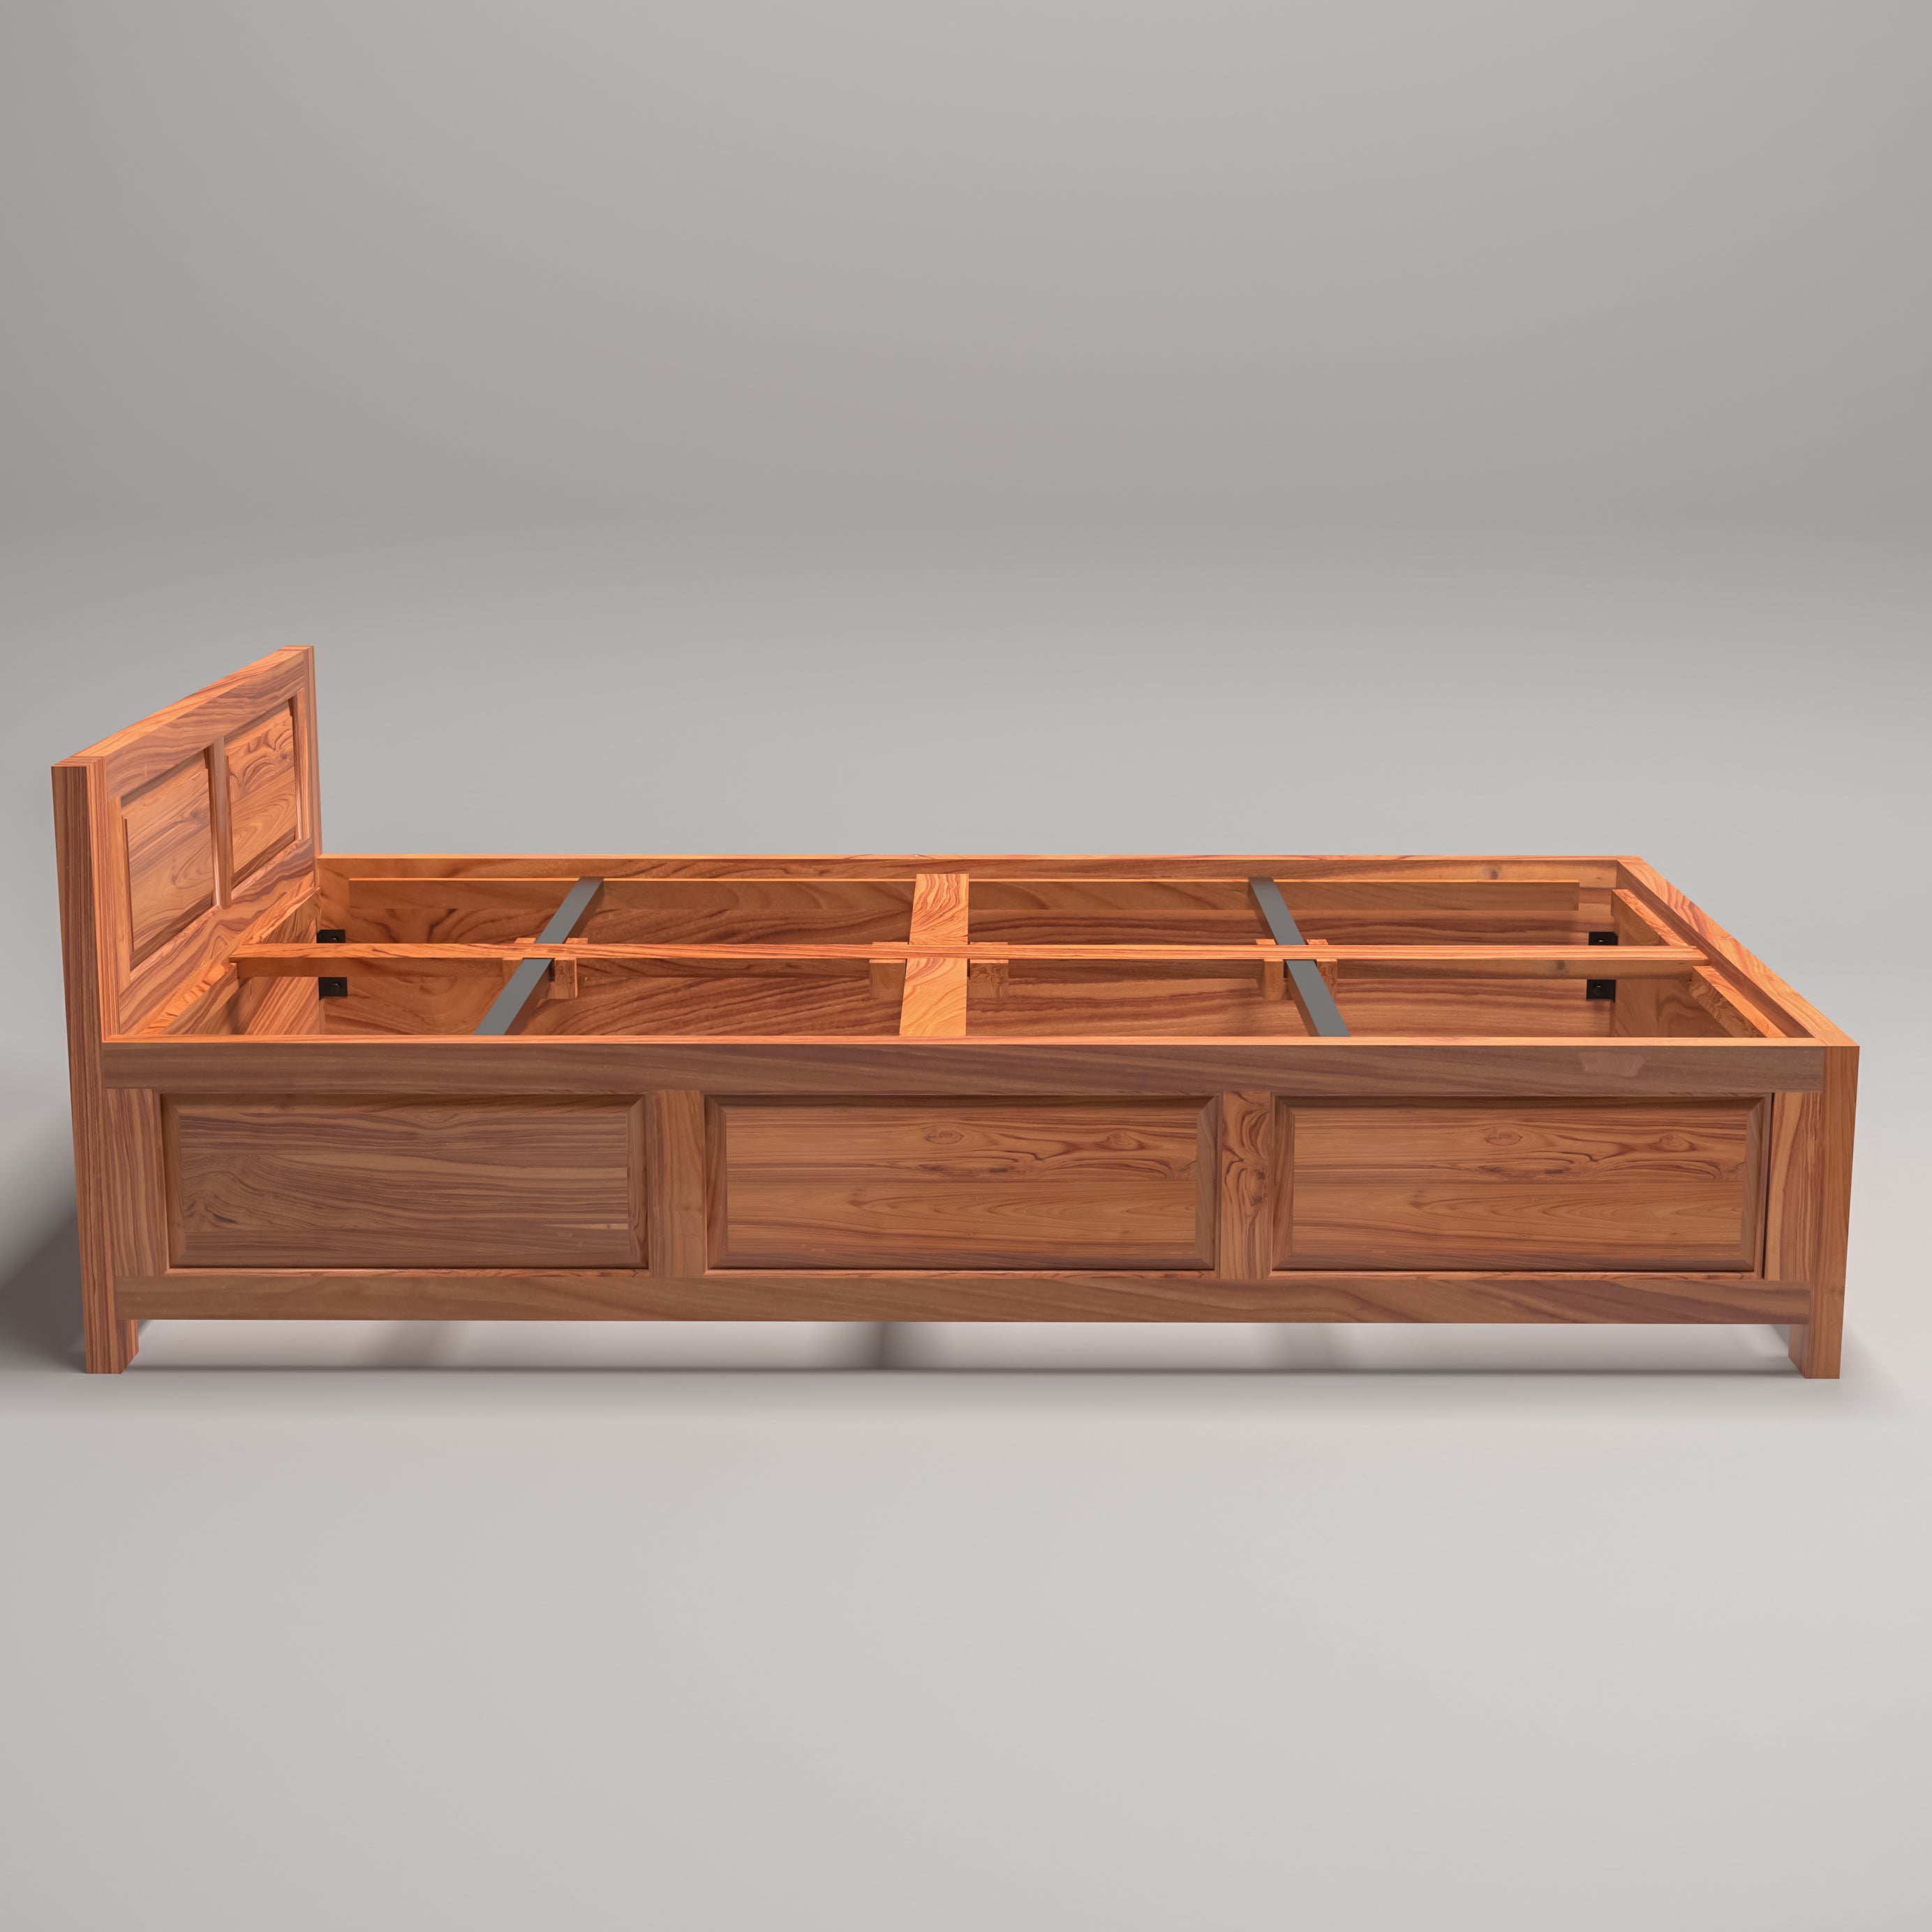 Wooden Designed Single Bed Bed